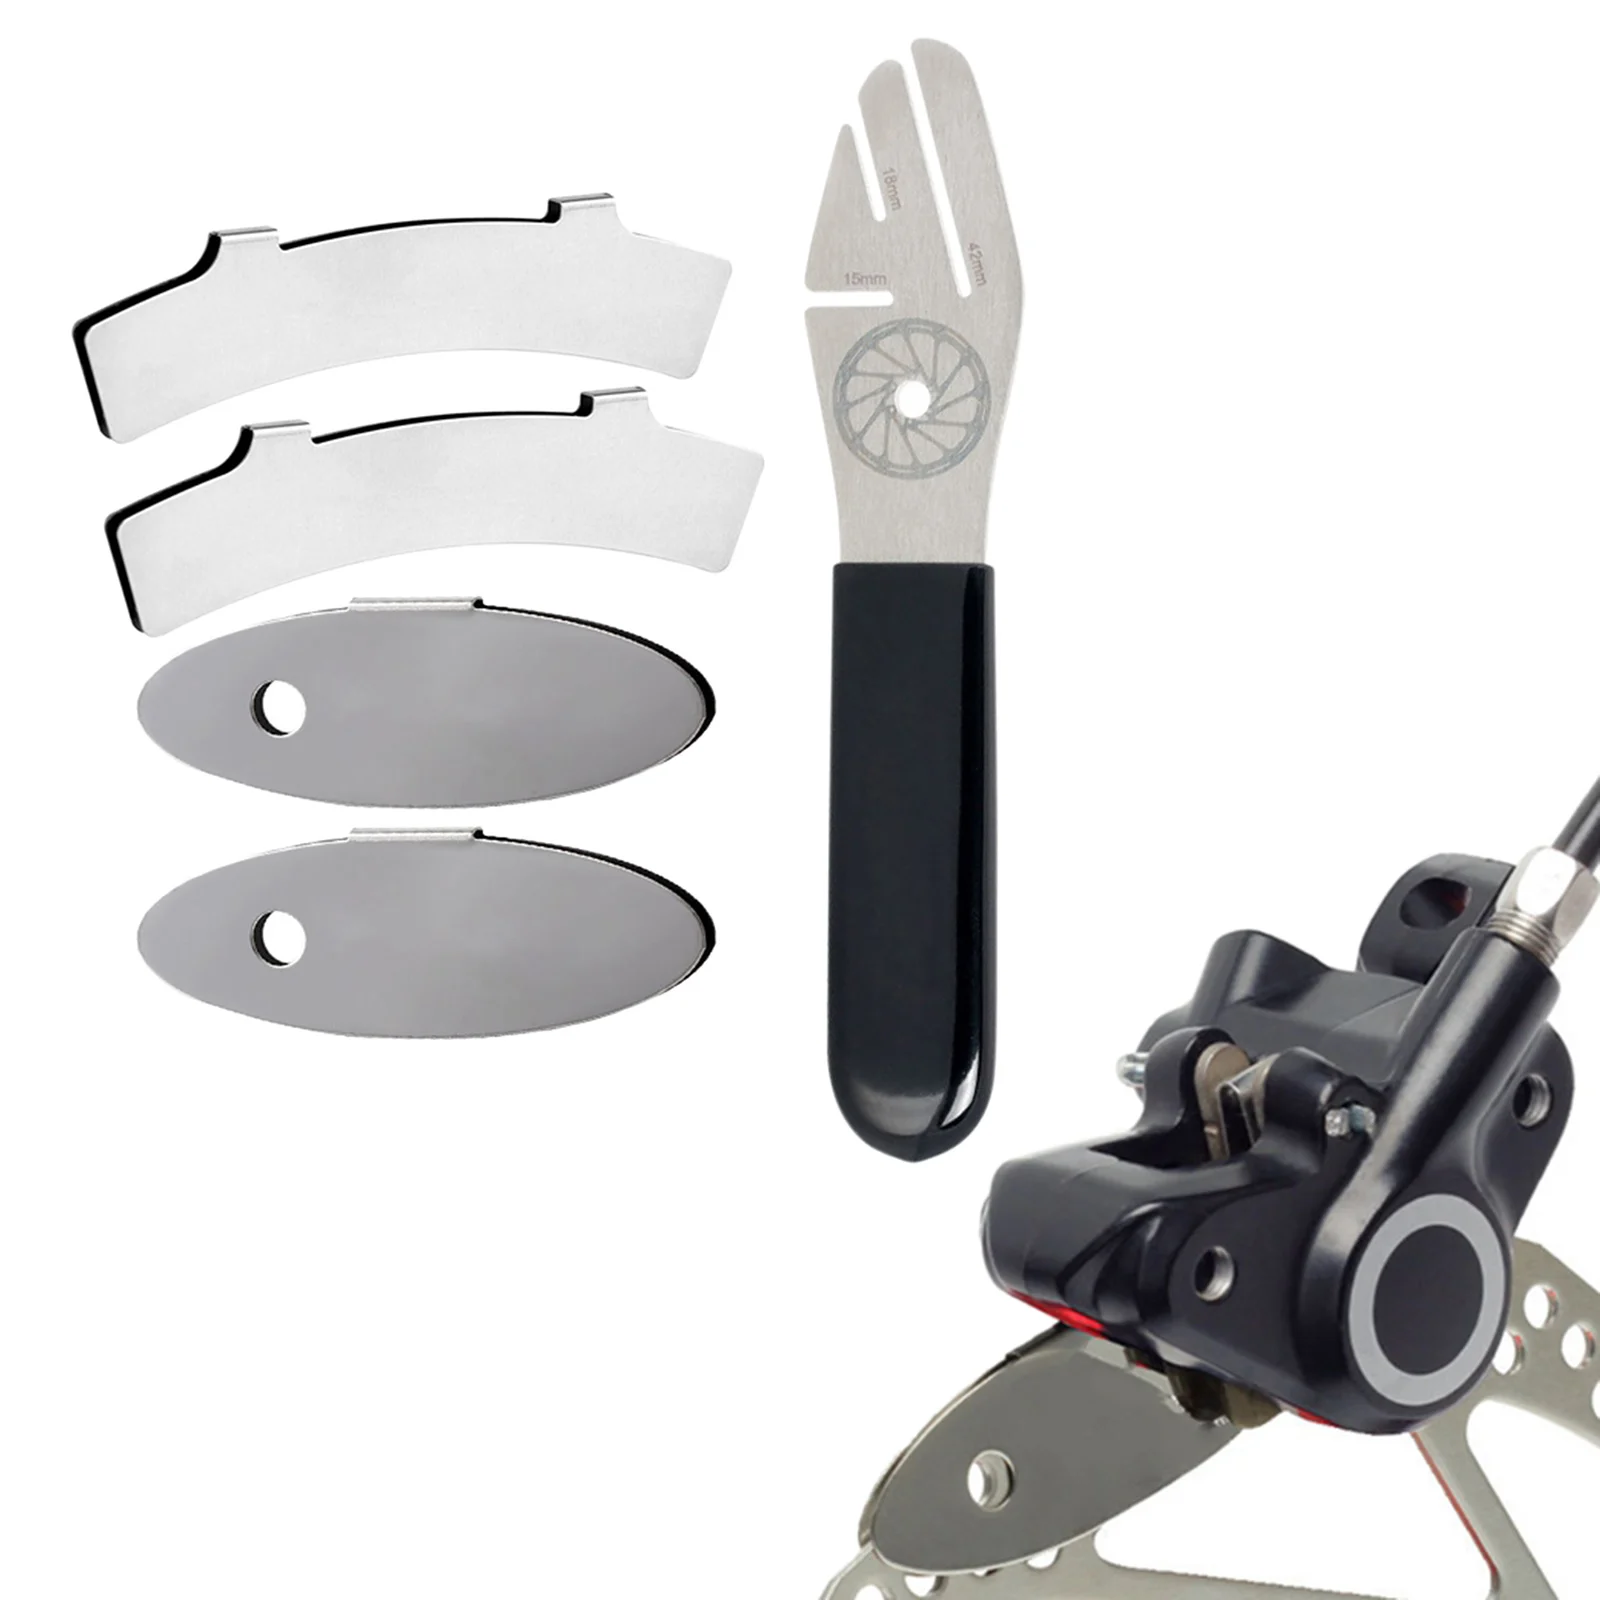 Bike Disc Rotor True Alignment Truing Fork Disc Brake Caliper Piston Press Spreading Tool Wrench